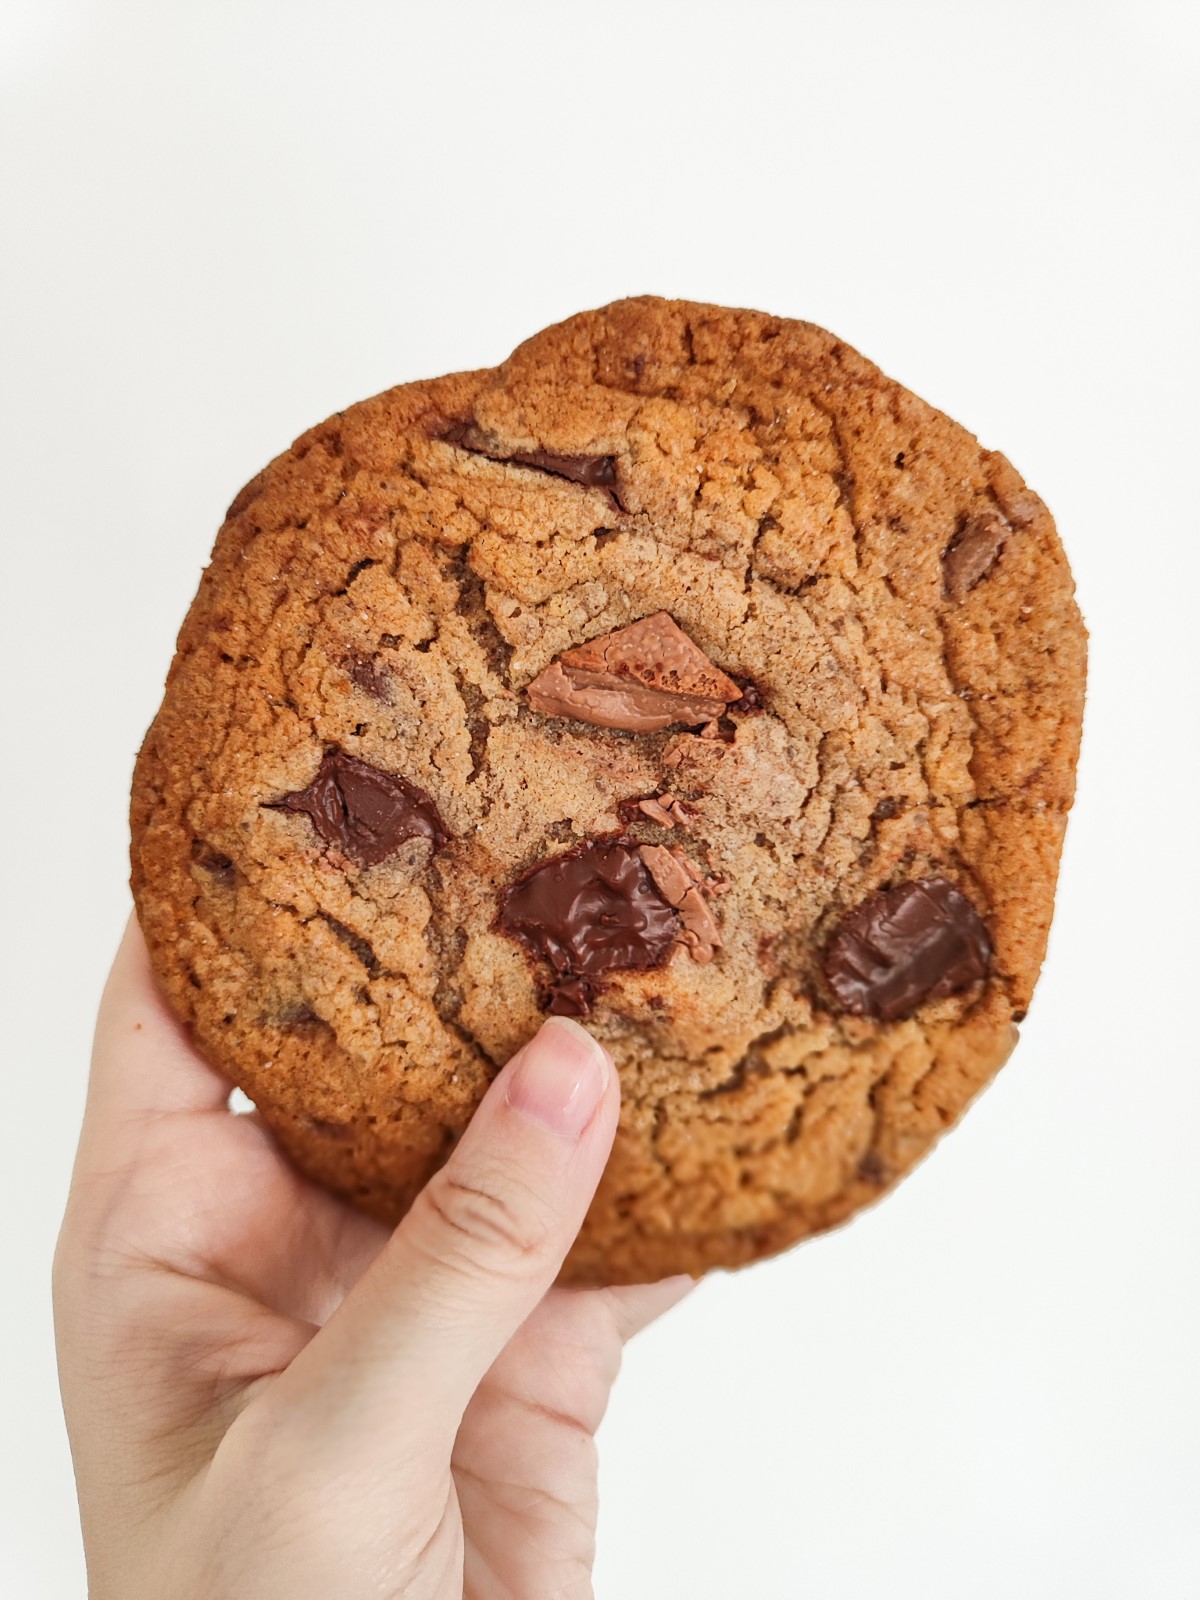 Schokoladenkekse (Chocolate Chip Cookies) - alt